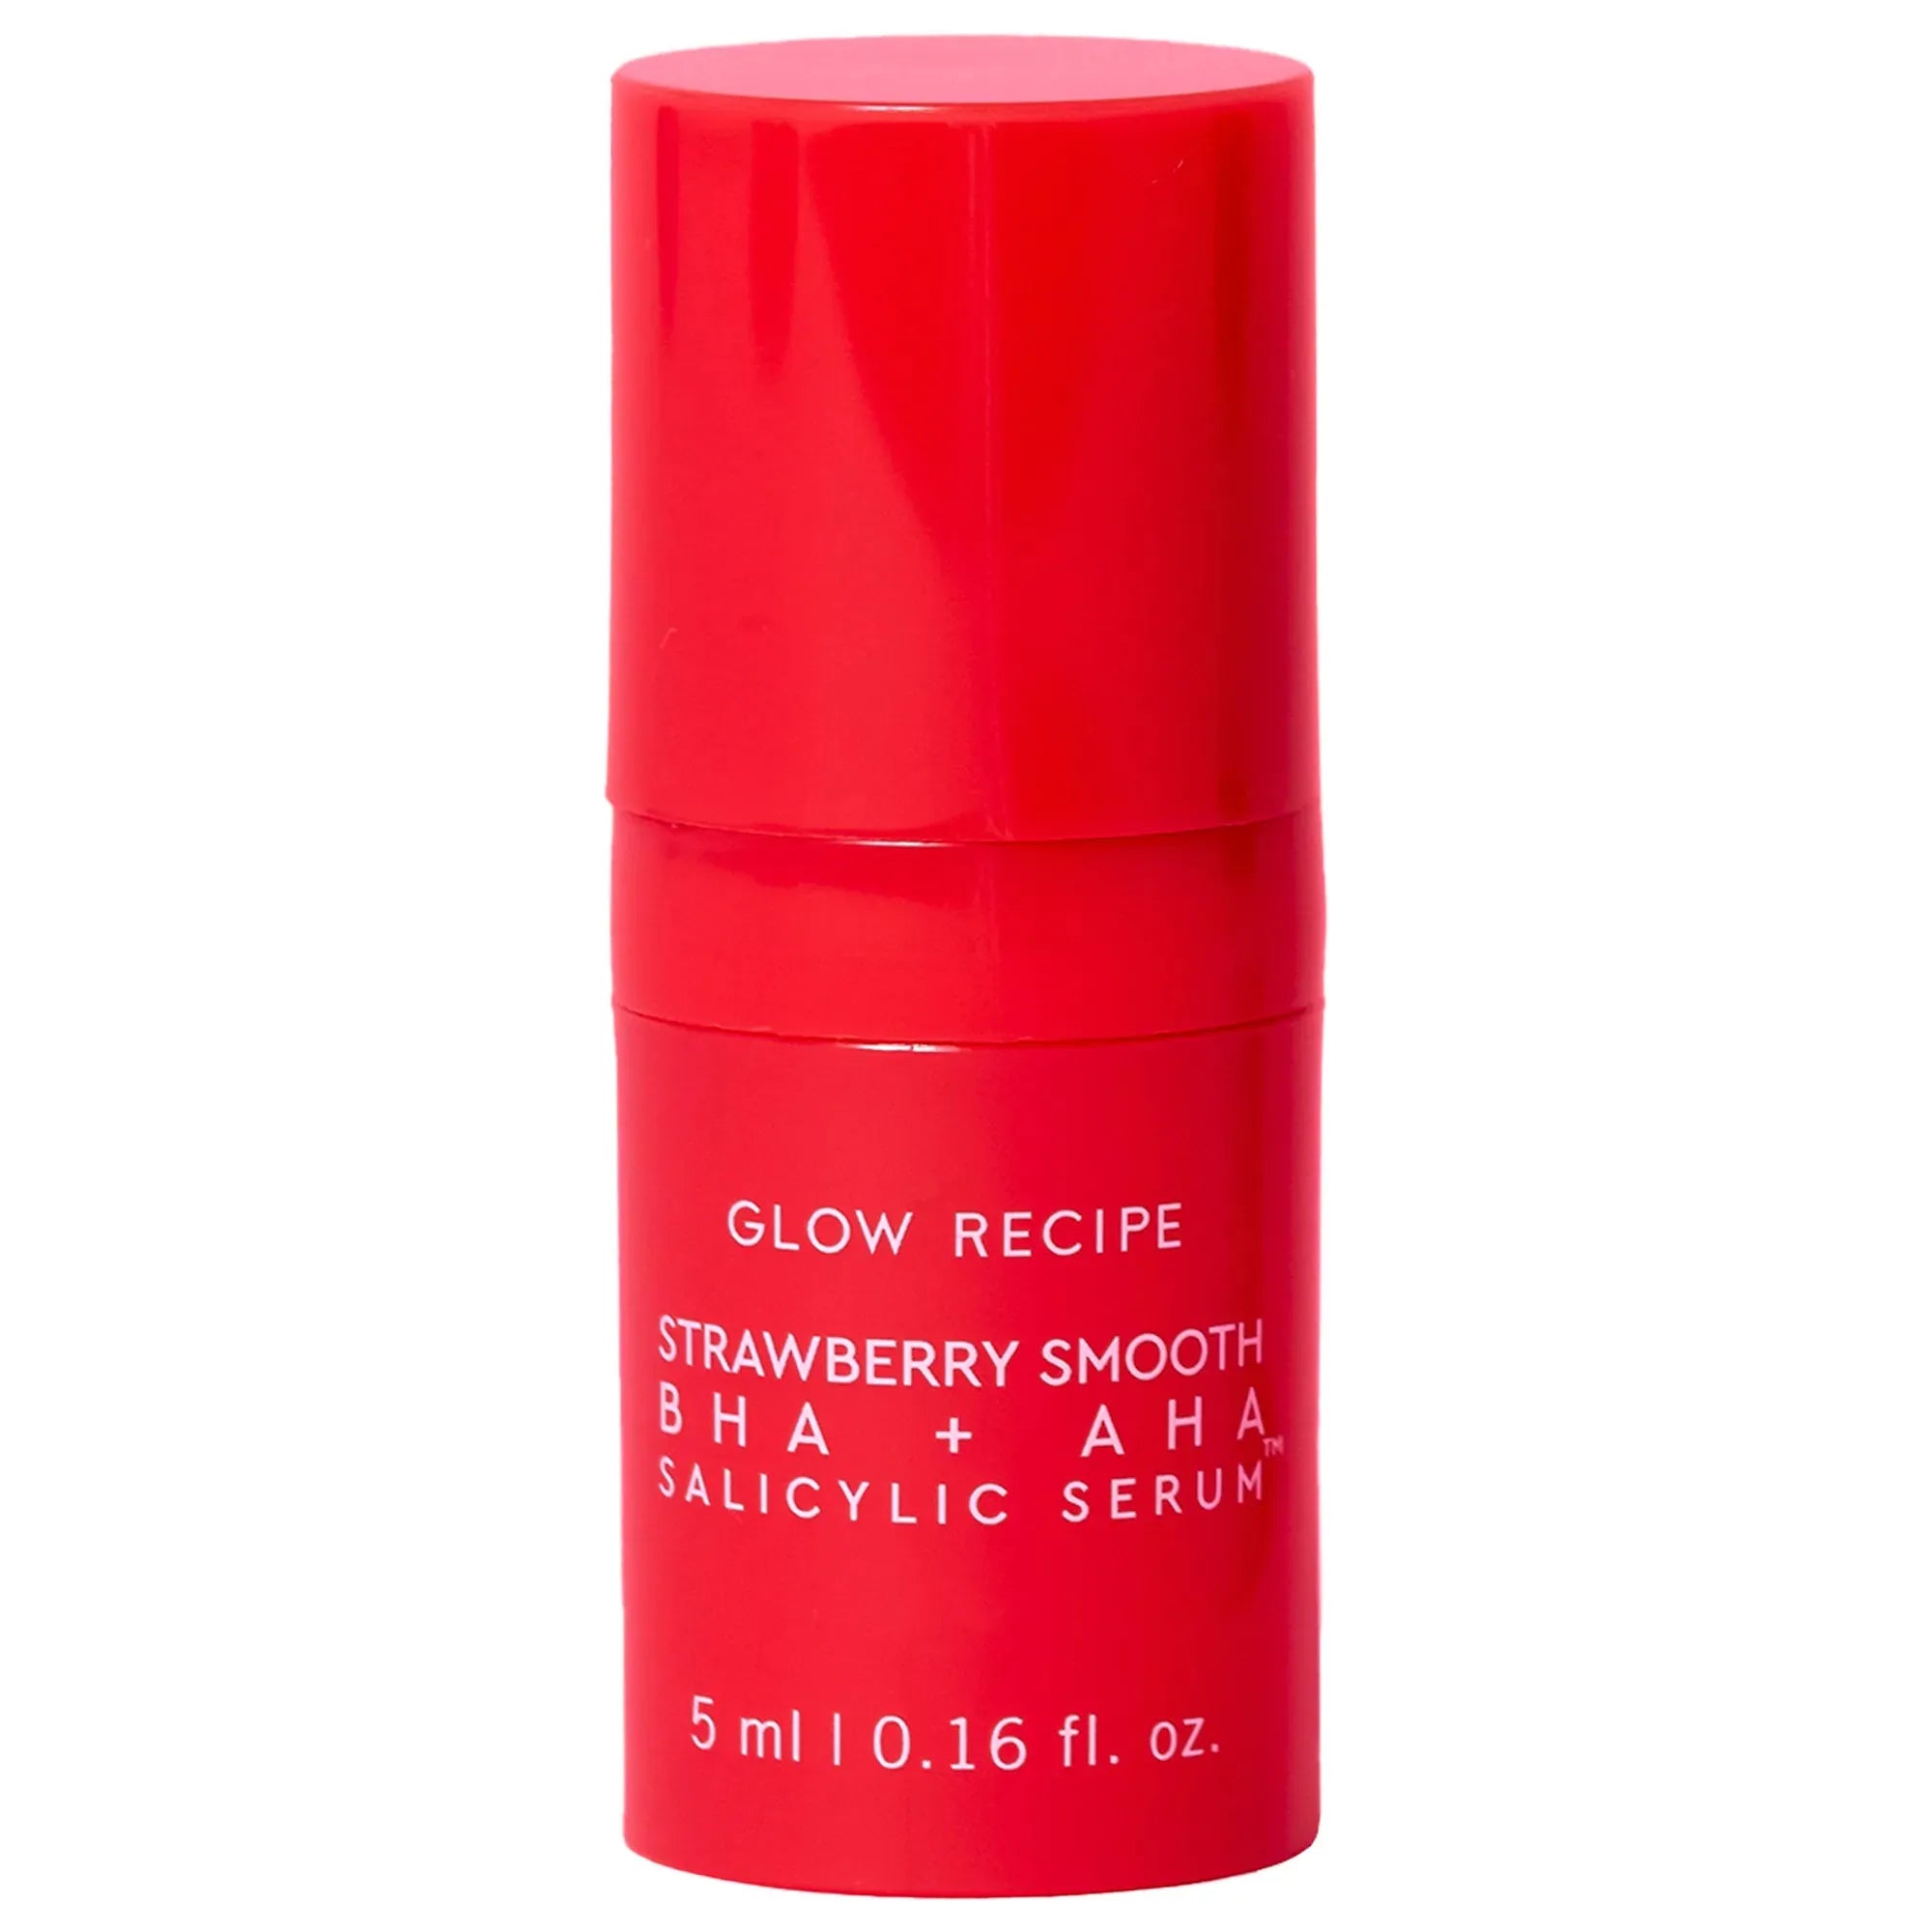 Shop Glow Recipe Strawberry Smooth bha + aha salicylic serum 5ml Online in Pakistan - ColorshowPk